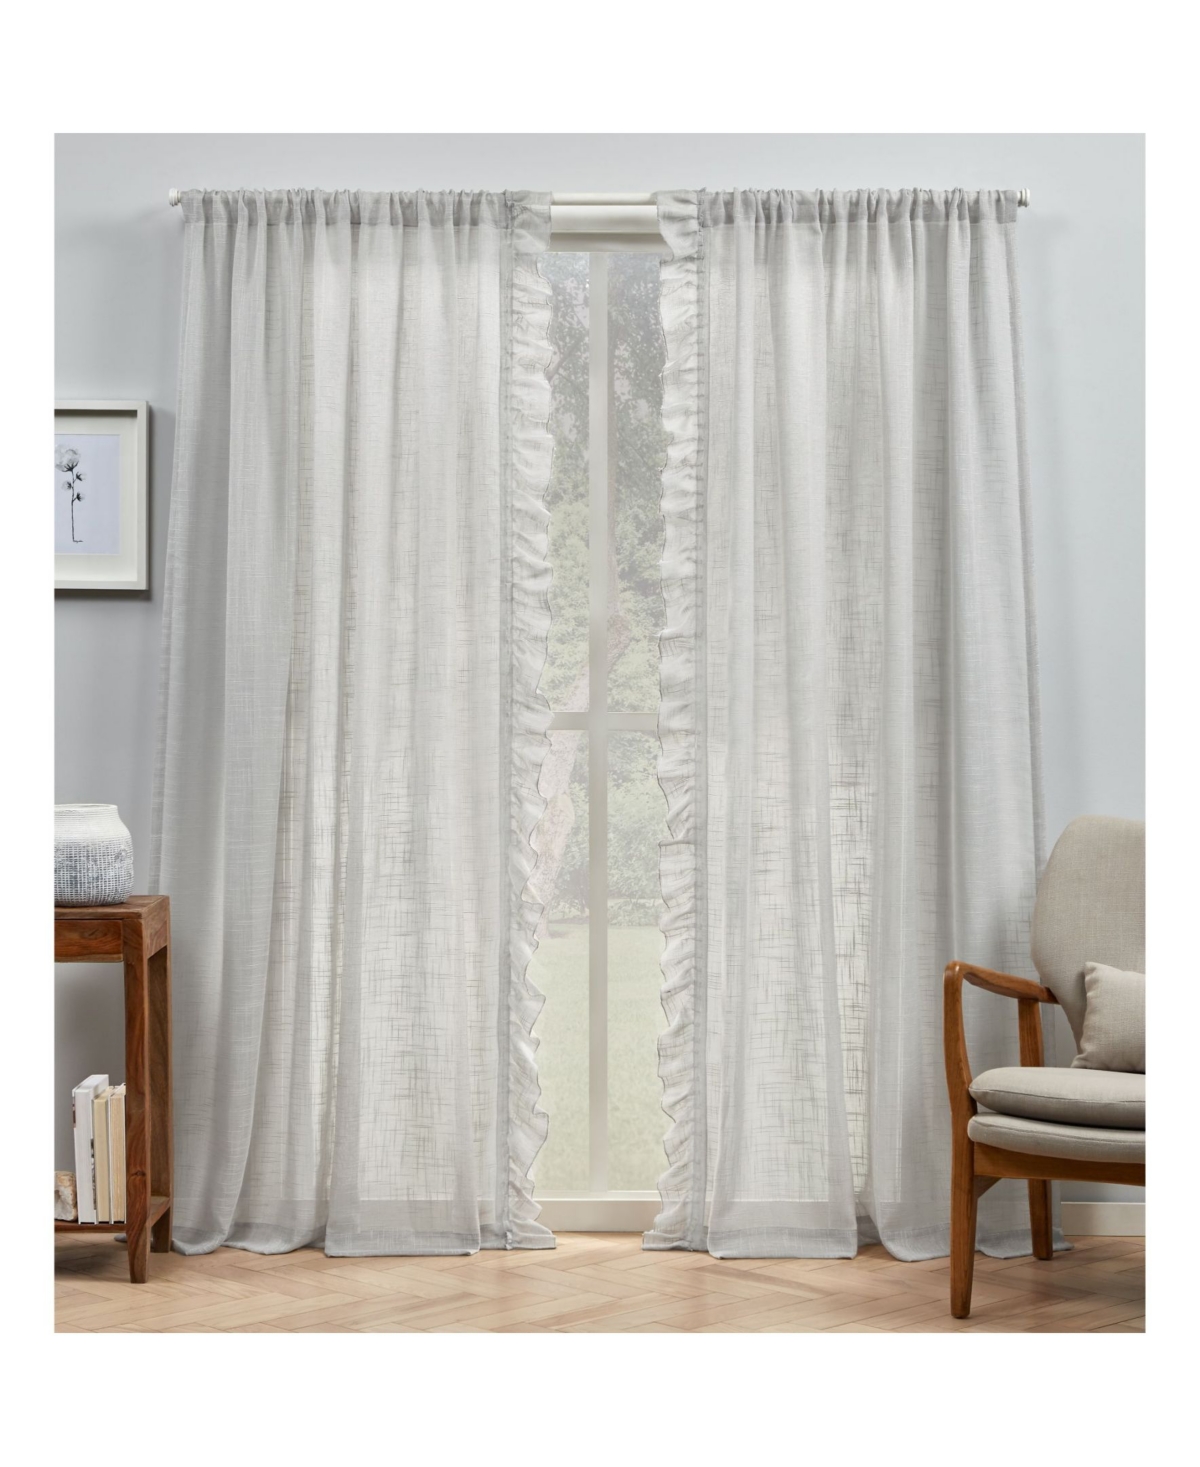 Curtains Jacinta Flippable Side Ruffle Sheer Rod Pocket Curtain Panel Pair, 54" x 96", Set of 2 - Dark Gray